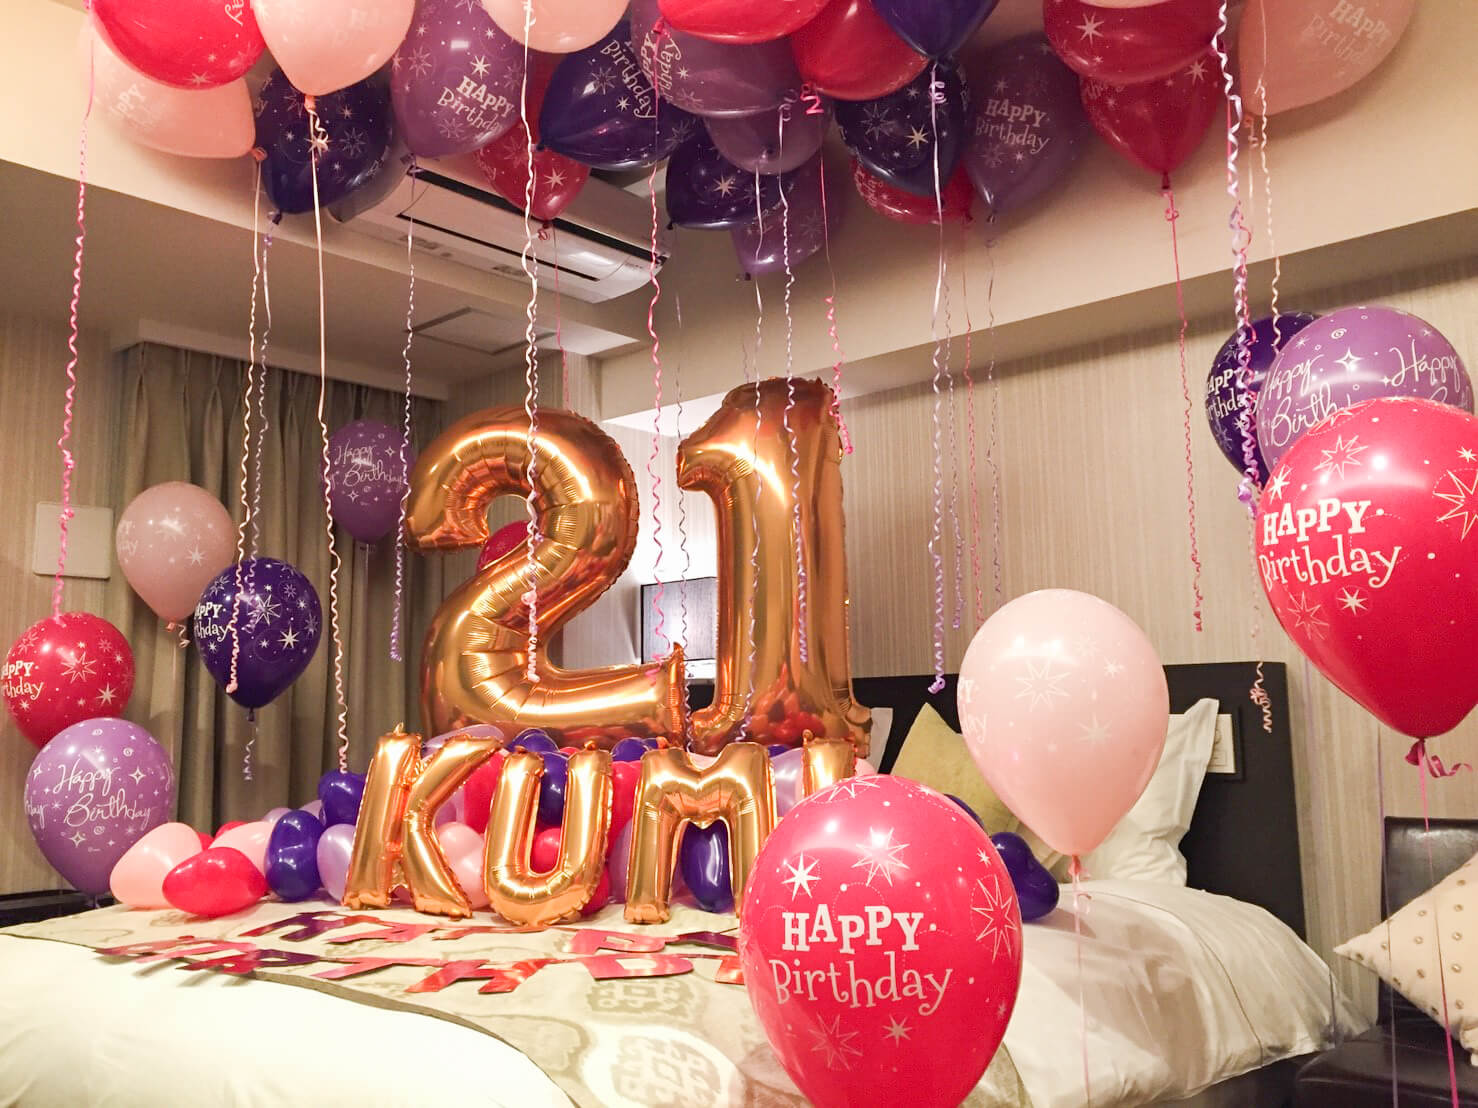 H 29 素敵なバルーンのホテル装飾 バルーン出張装飾 ホテルサプライズ 誕生日やプロポーズはアニプラバルーン